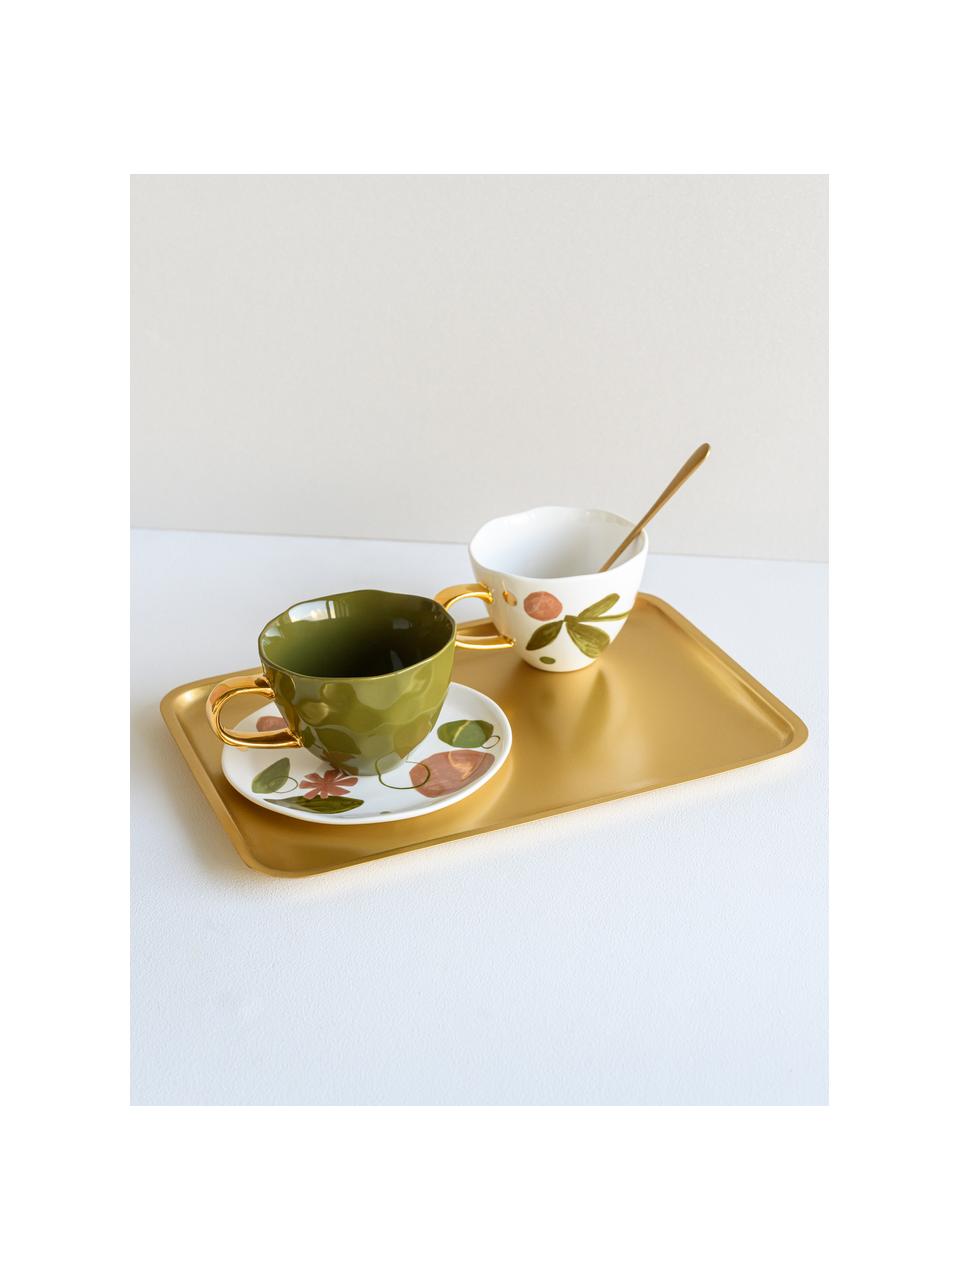 Tasse en porcelaine avec poignée dorée Good Morning Expressive, Blanc, rose, vert, couleur dorée